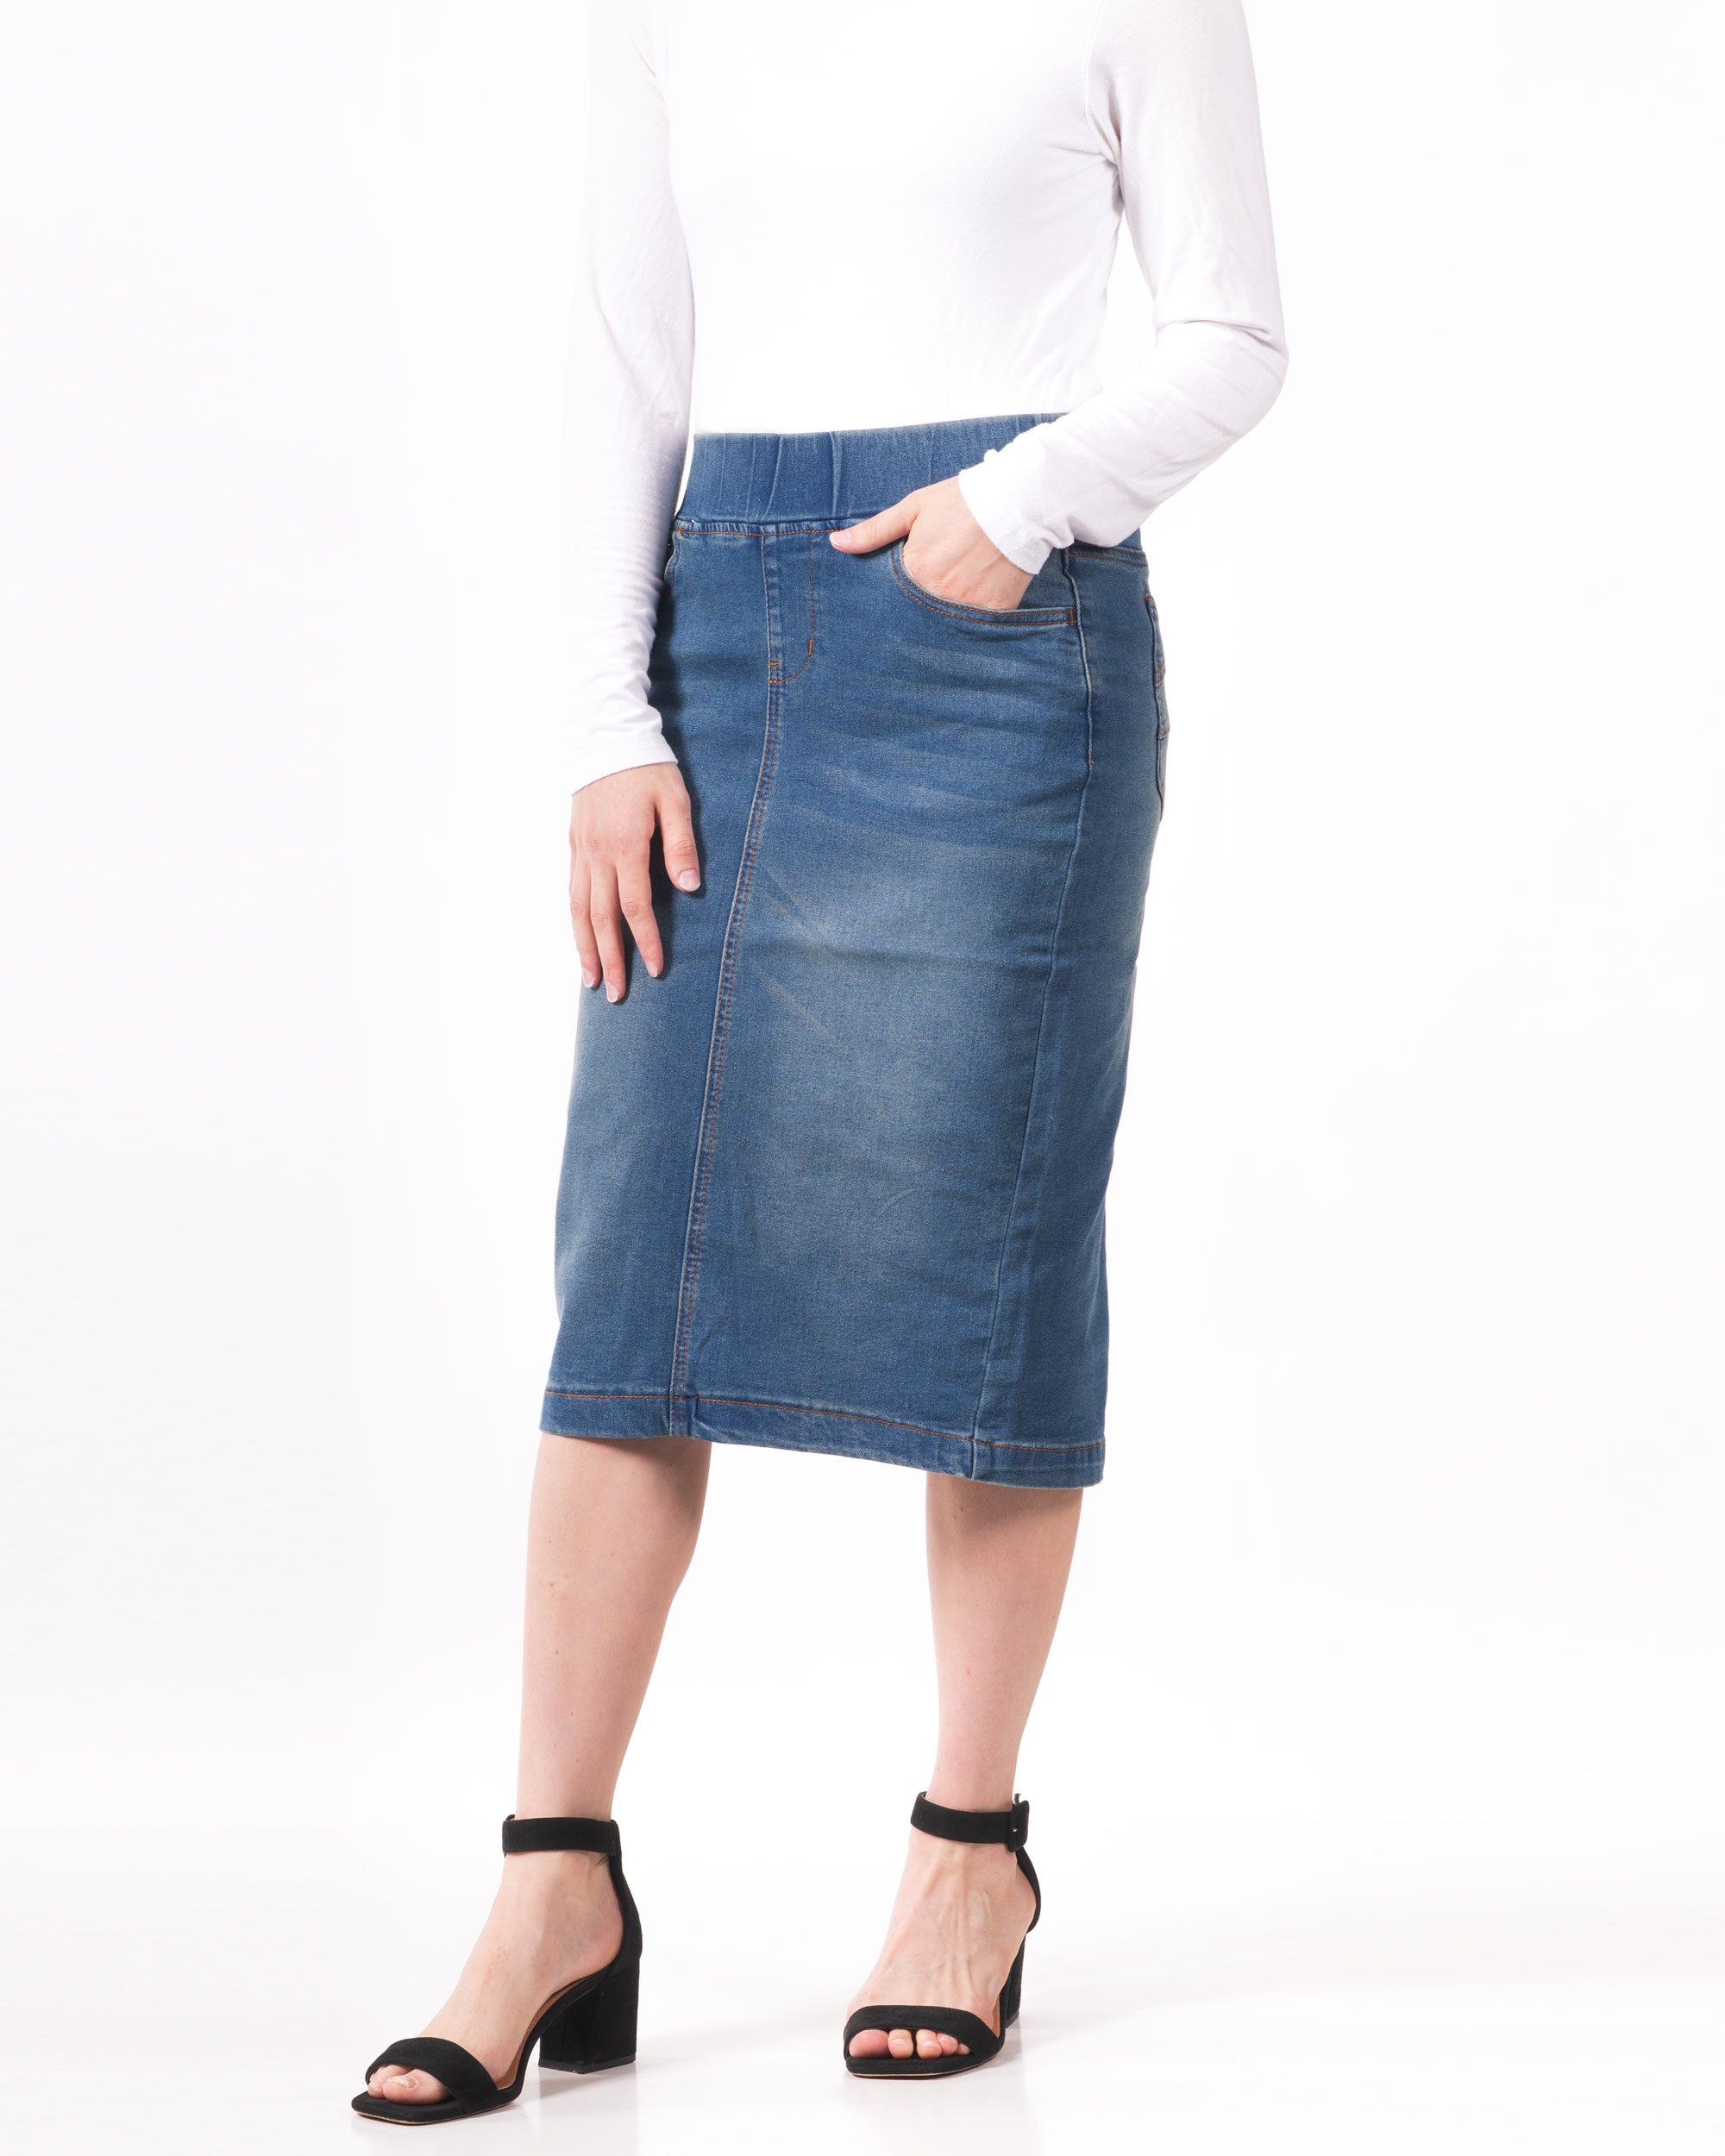 Ava's Vintage Wash Denim Skirt